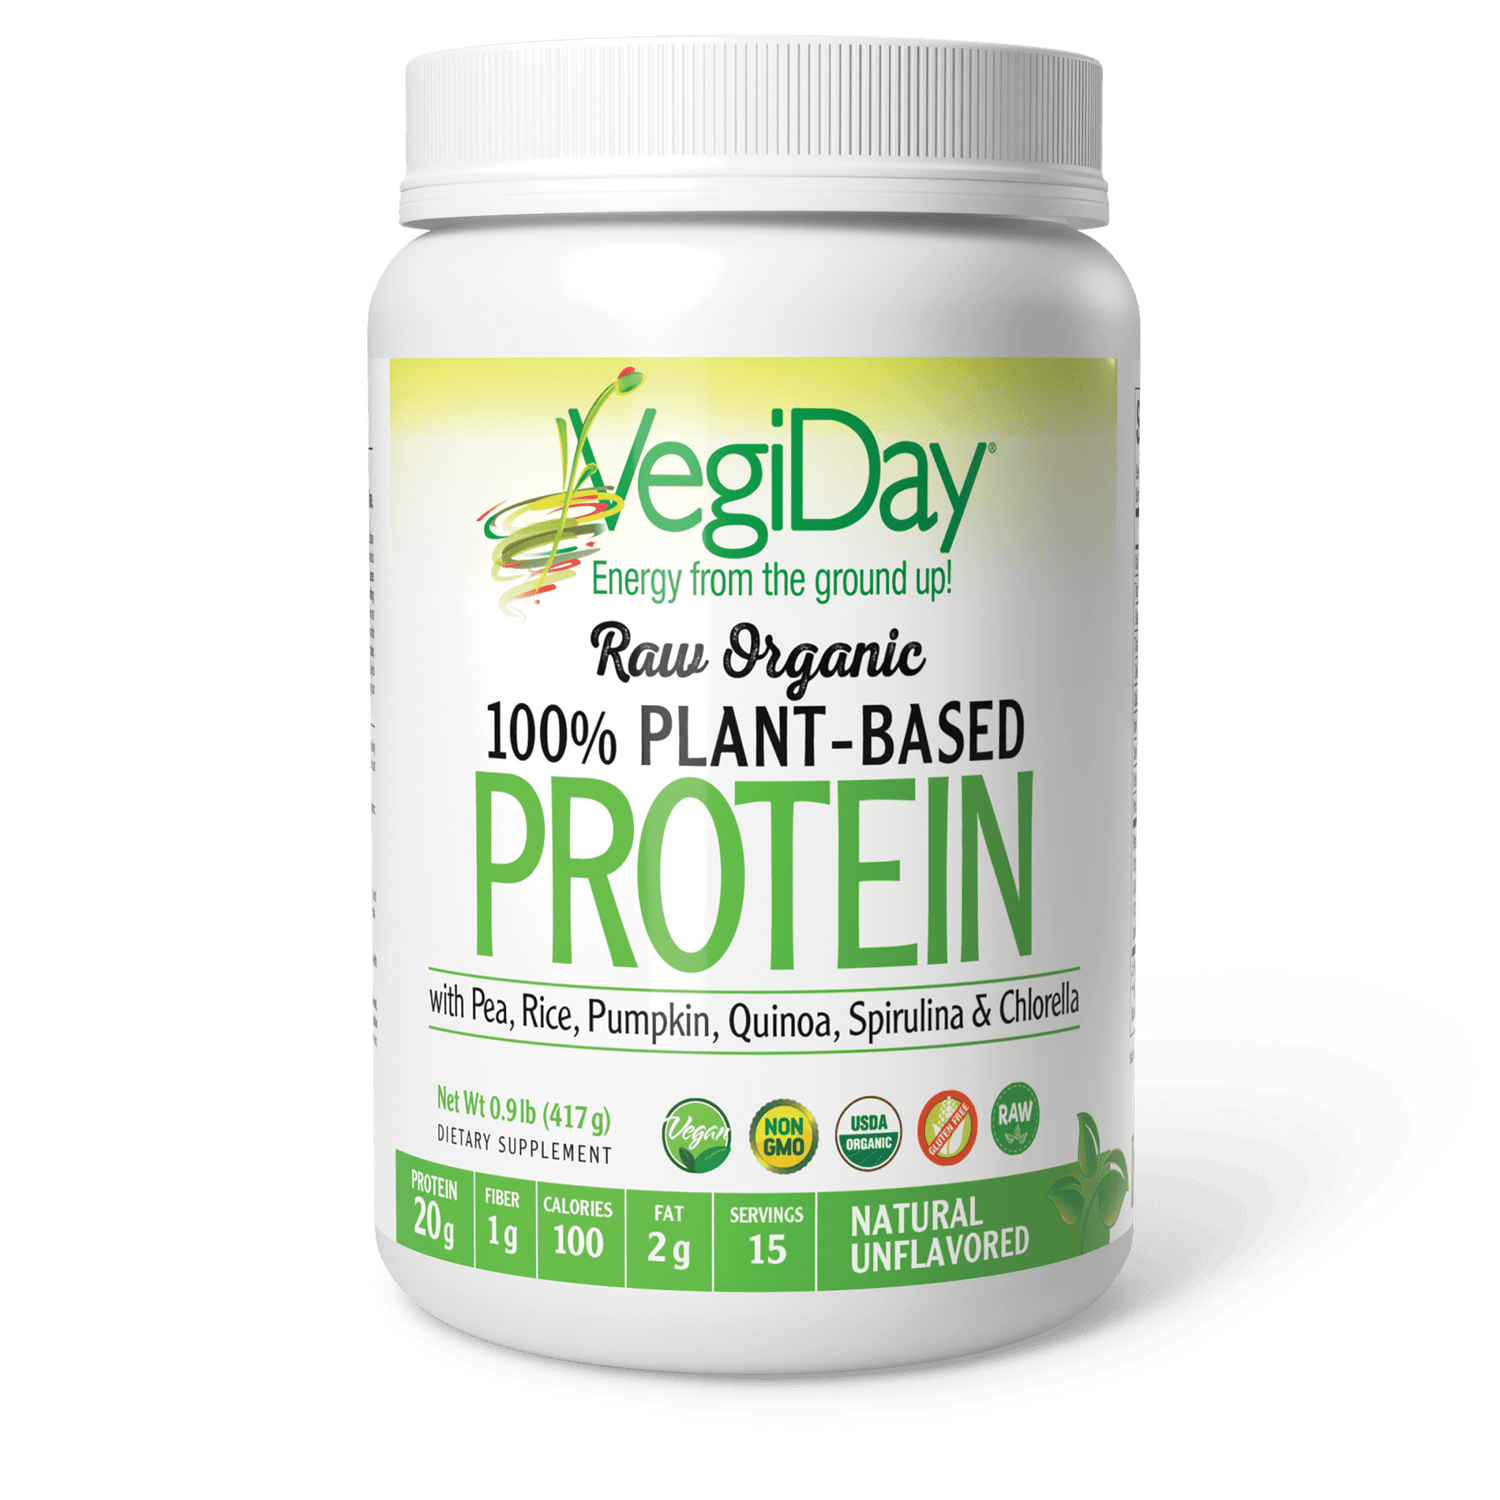 Raw Organic 100% Plant-Based Protein|variant|hi-res|2936U